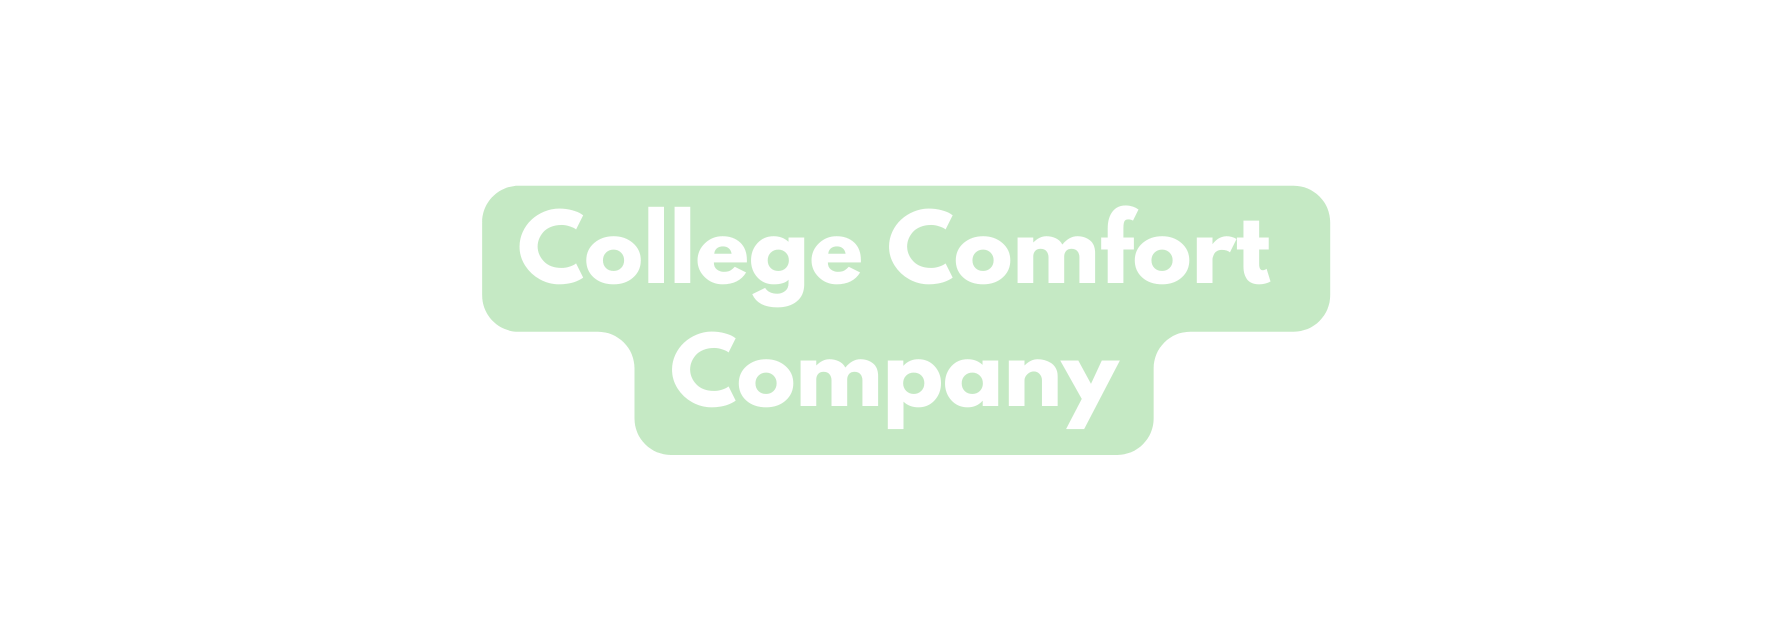 College Comfort Company